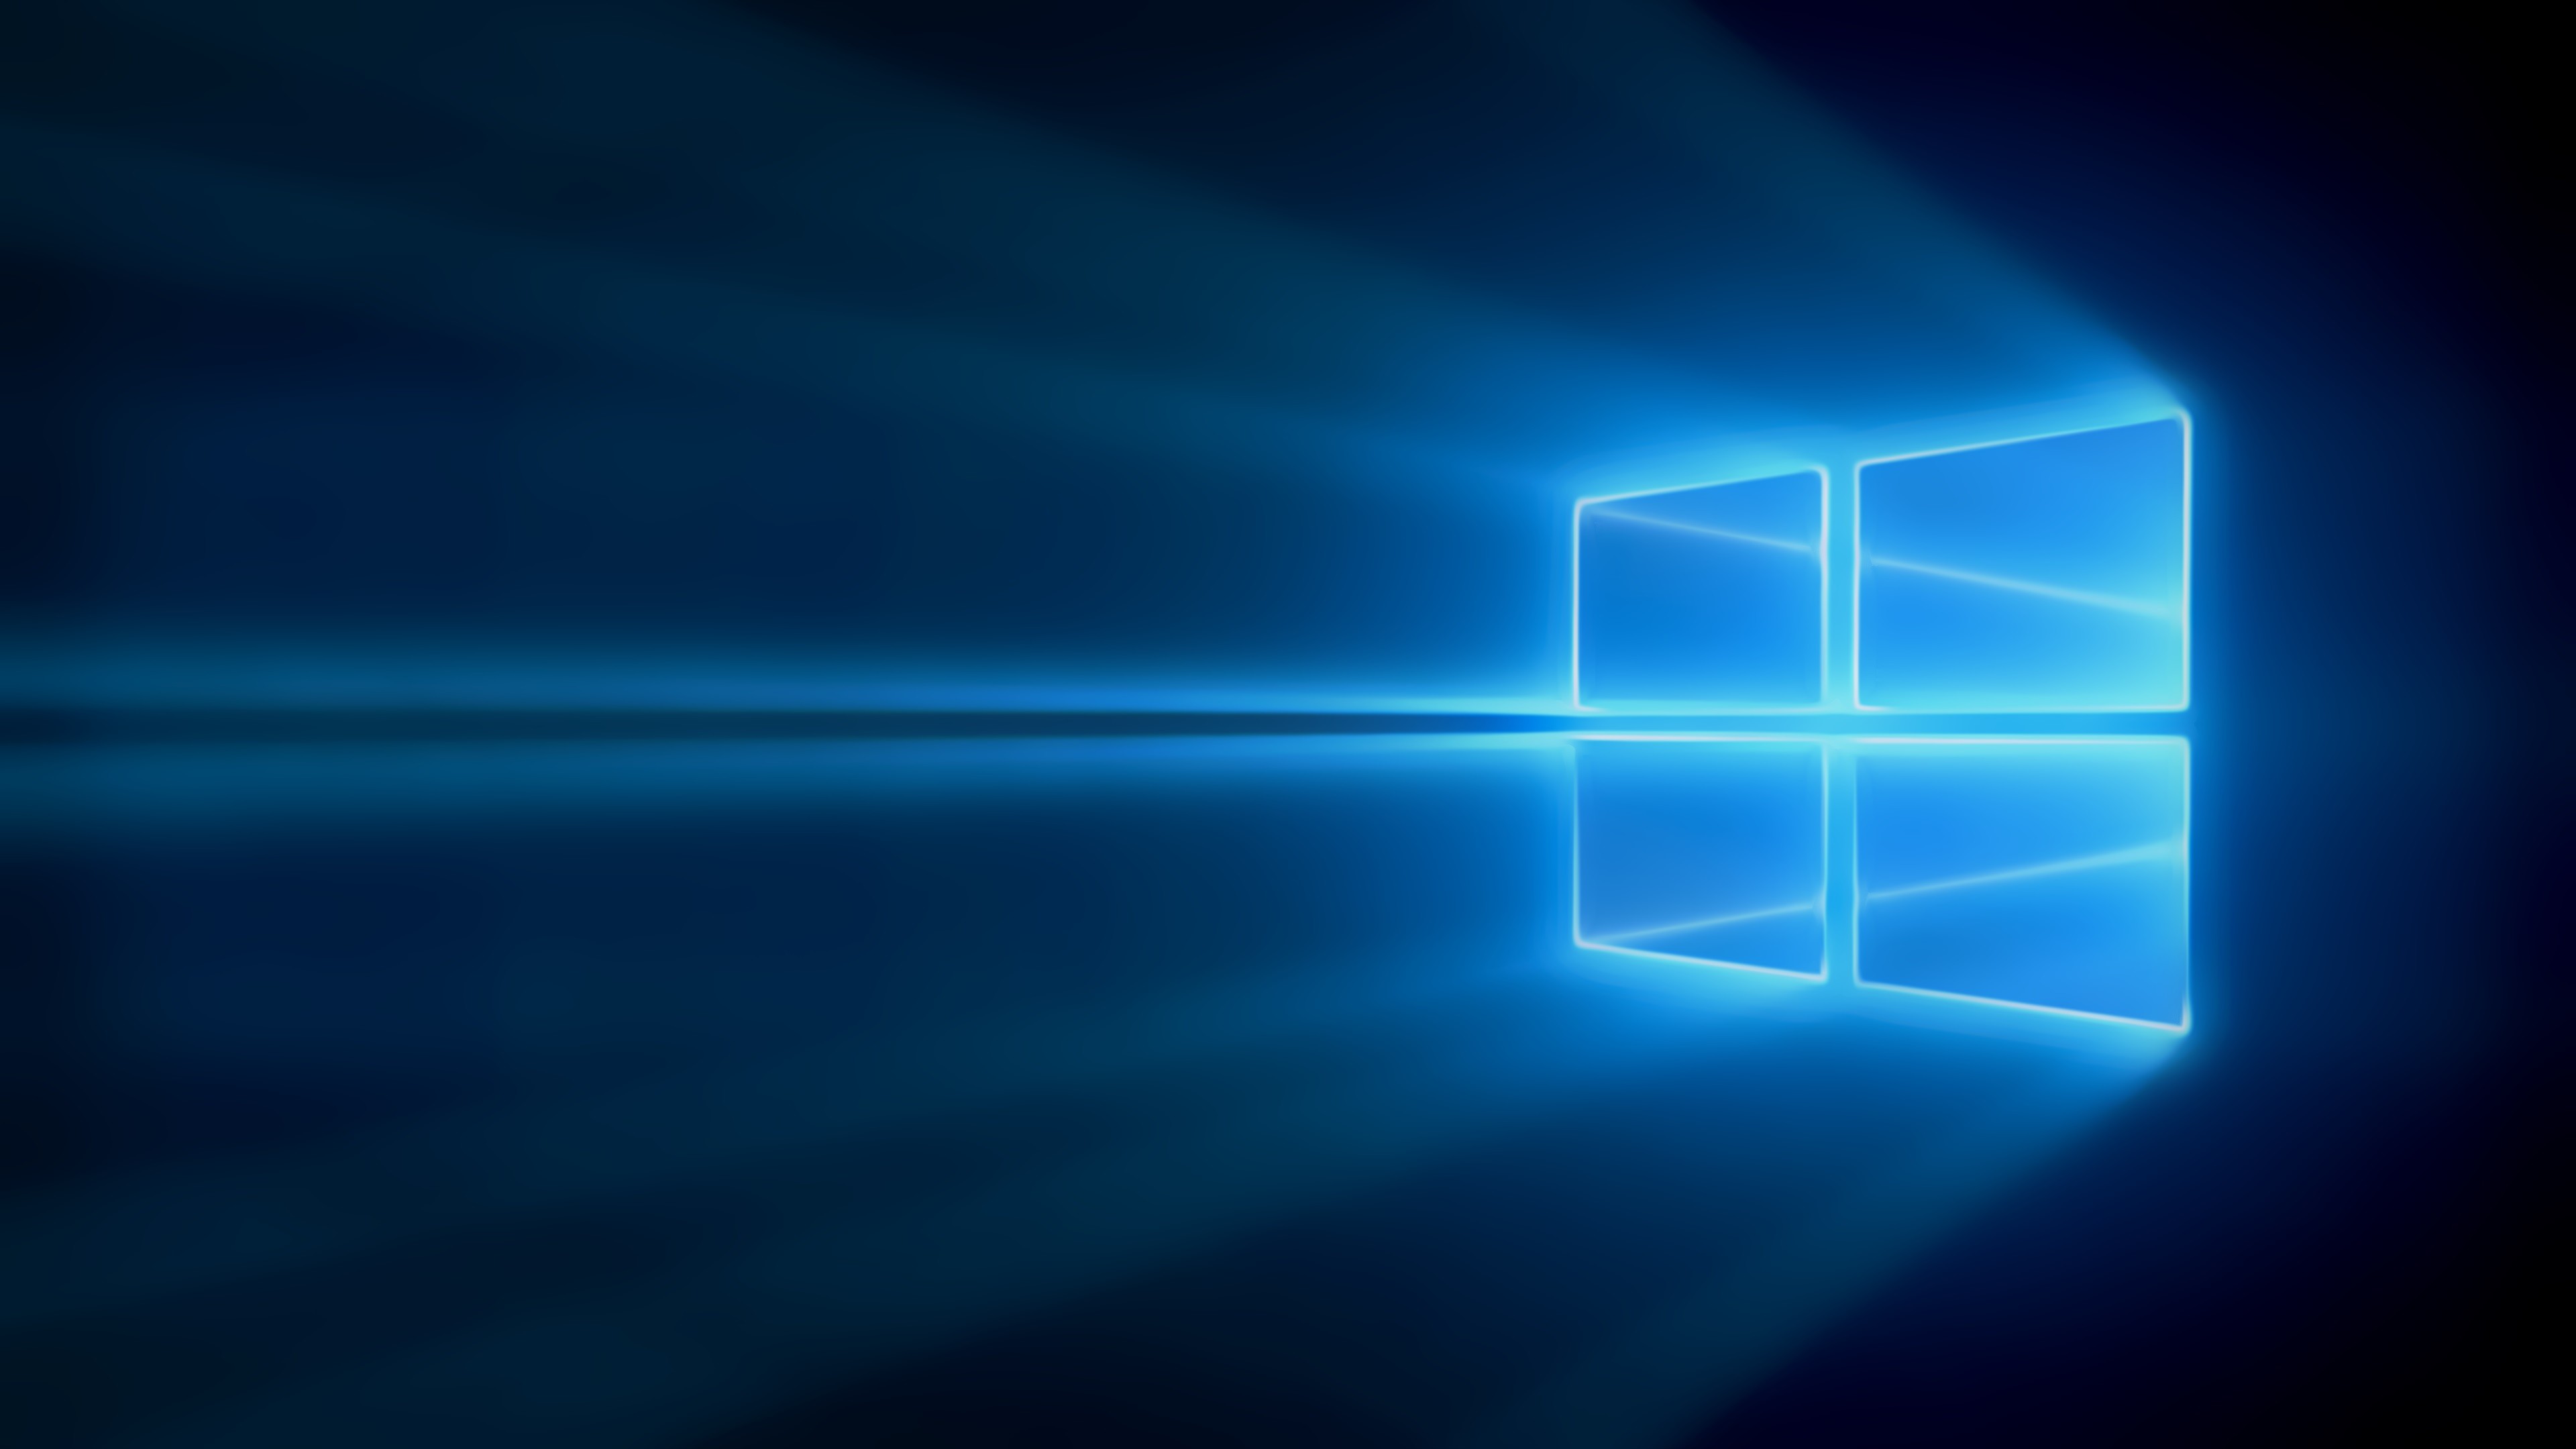 Windows 10 hero image remake